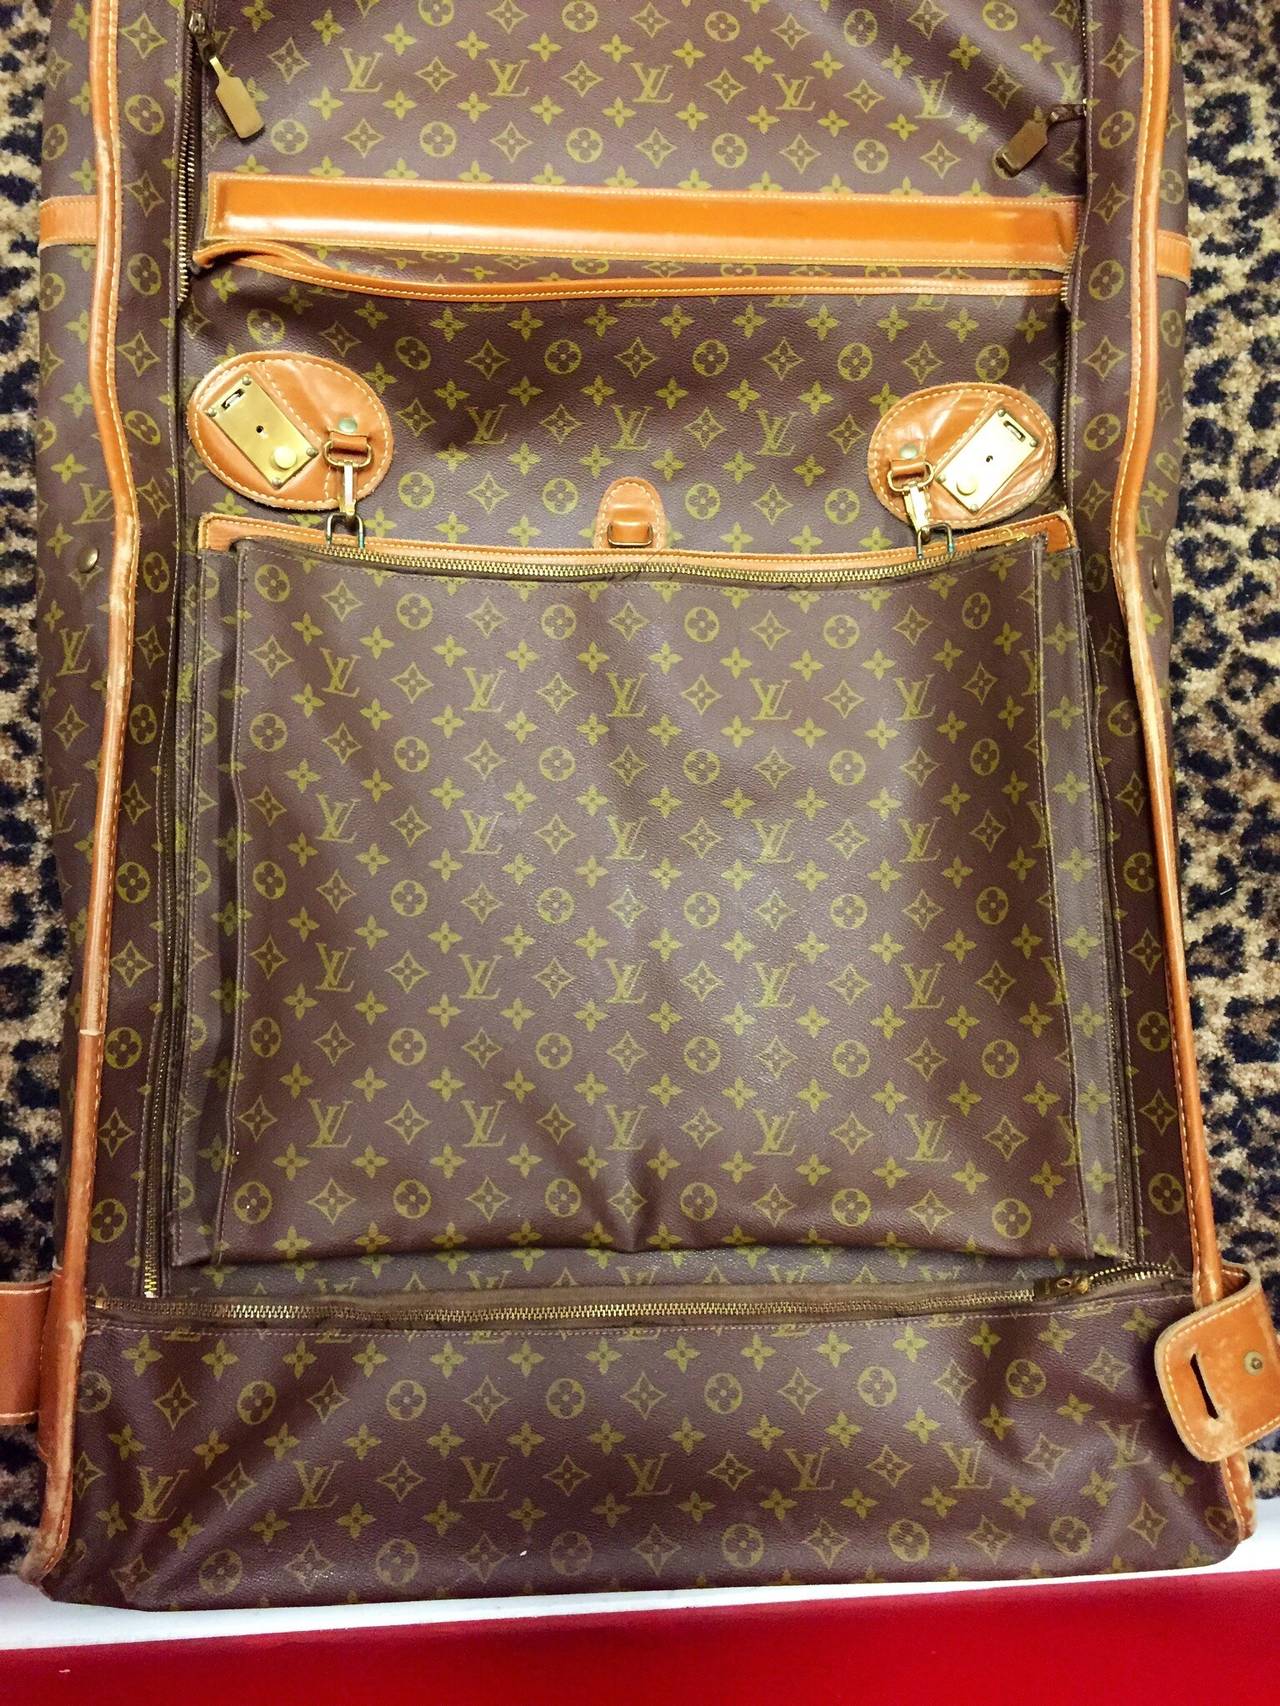 This is a rare vintage Louis Vuitton French Company monogram garment travel bag with 2 detachable accessory large pouches
Measurements:
53